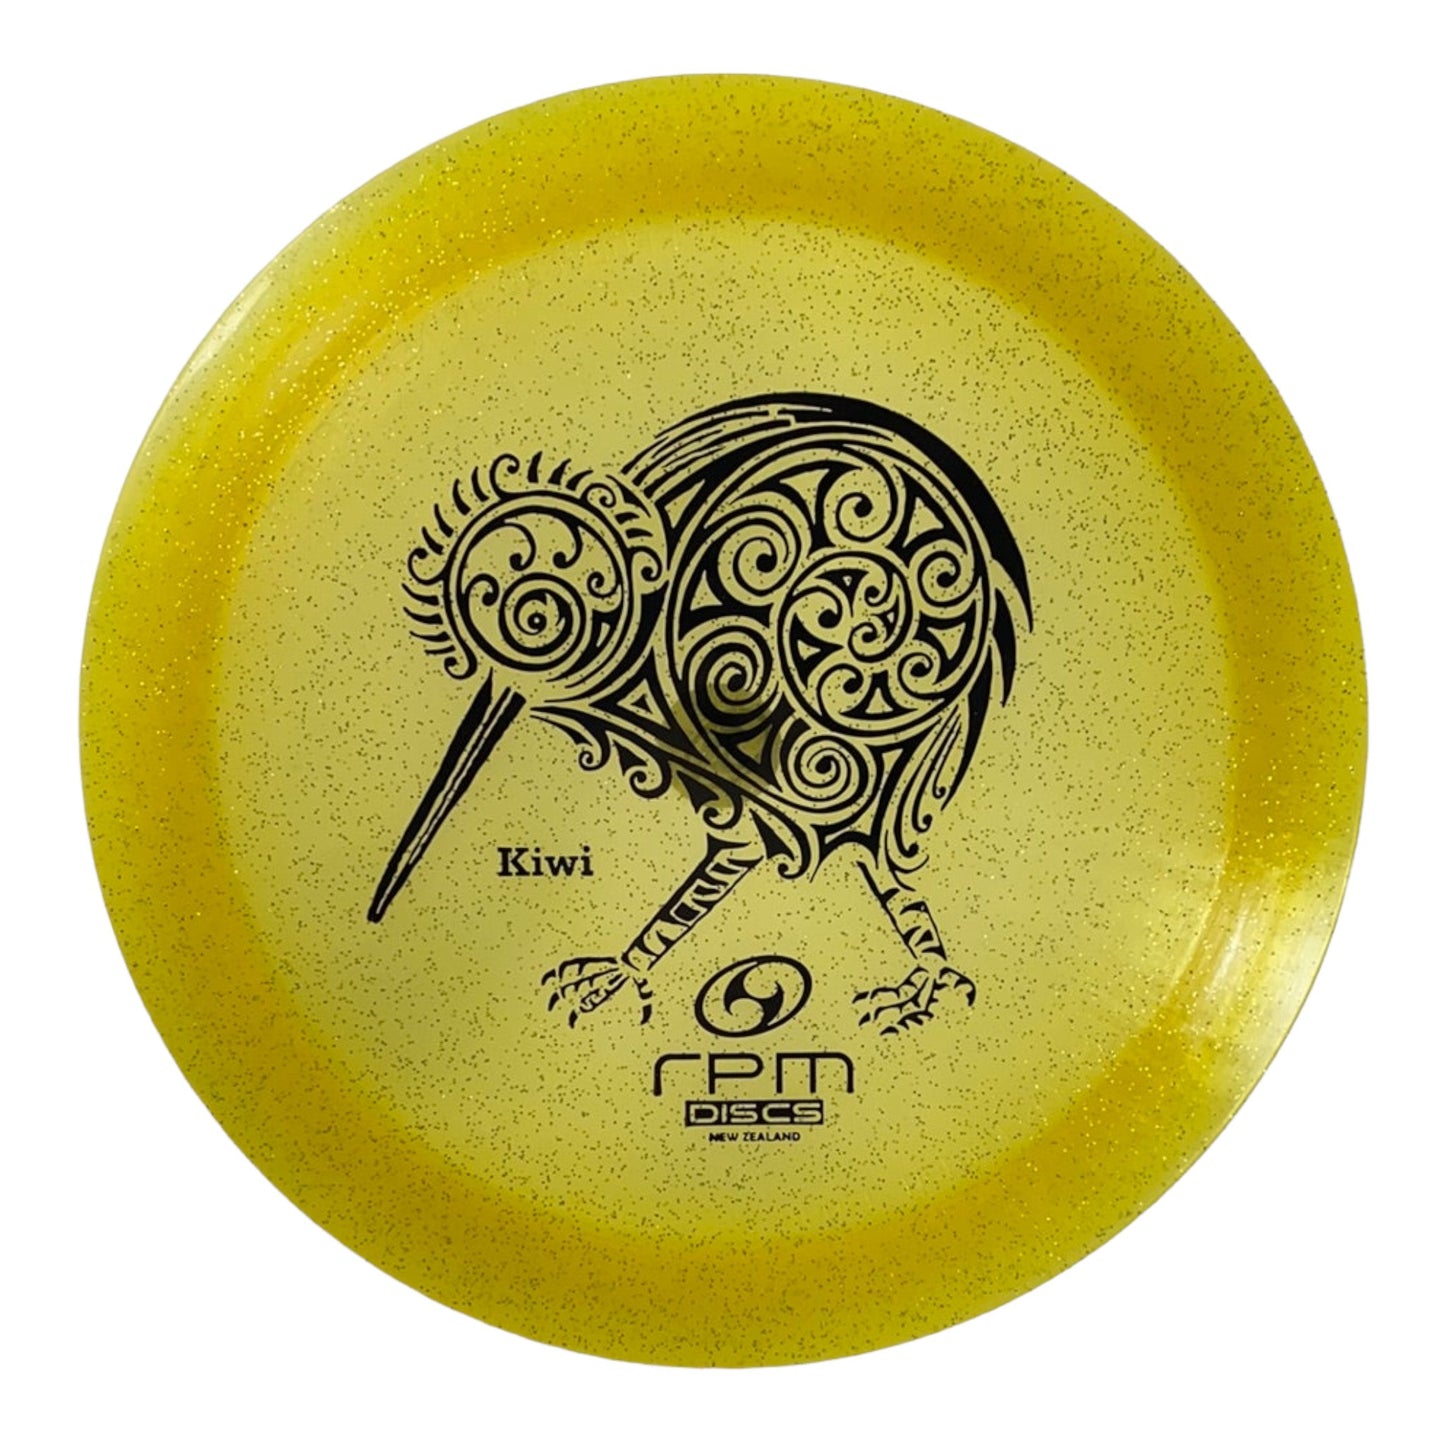 RPM Discs Kiwi | Cosmic | Yellow/Black 173g Disc Golf